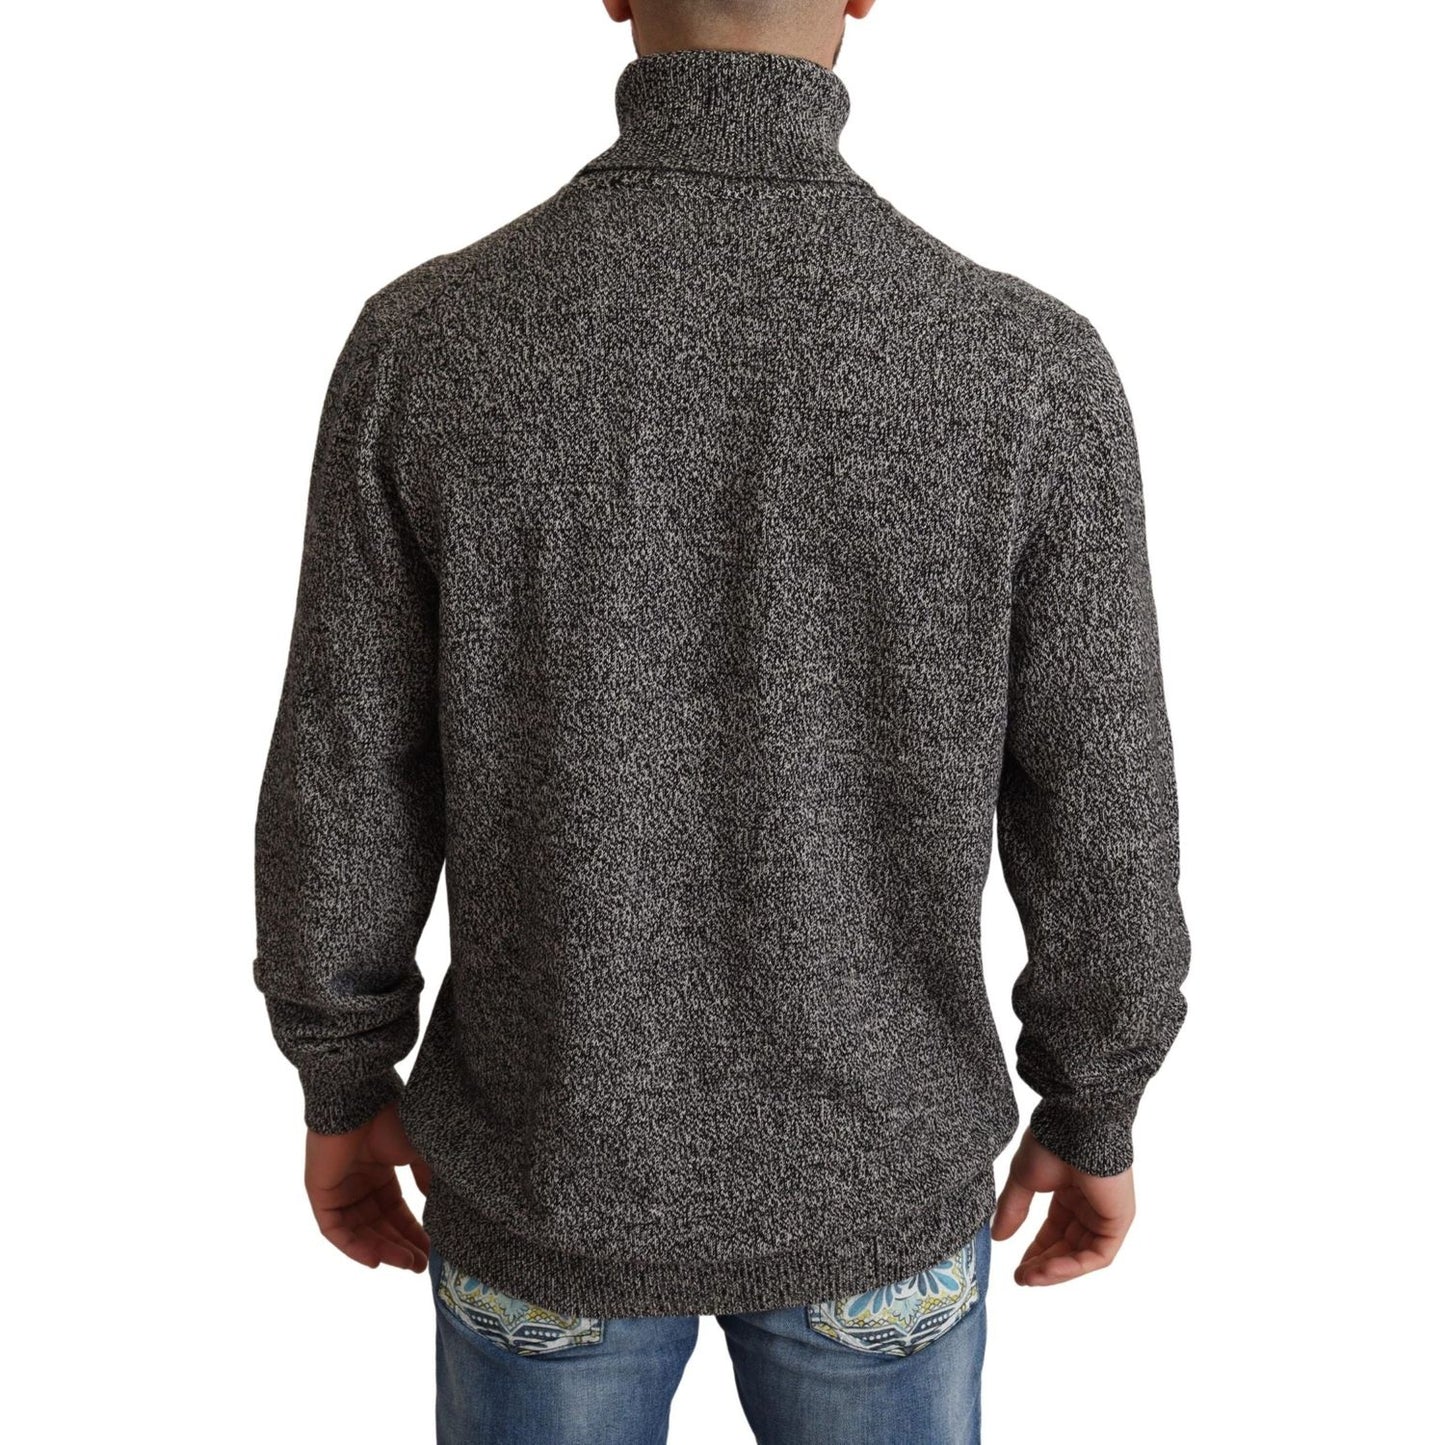 Dolce & Gabbana Gray Turtle Neck Cashmere Pullover Sweater gray-turtle-neck-cashmere-pullover-sweater MAN SWEATERS IMG_0170-scaled-4e960f24-88e.jpg